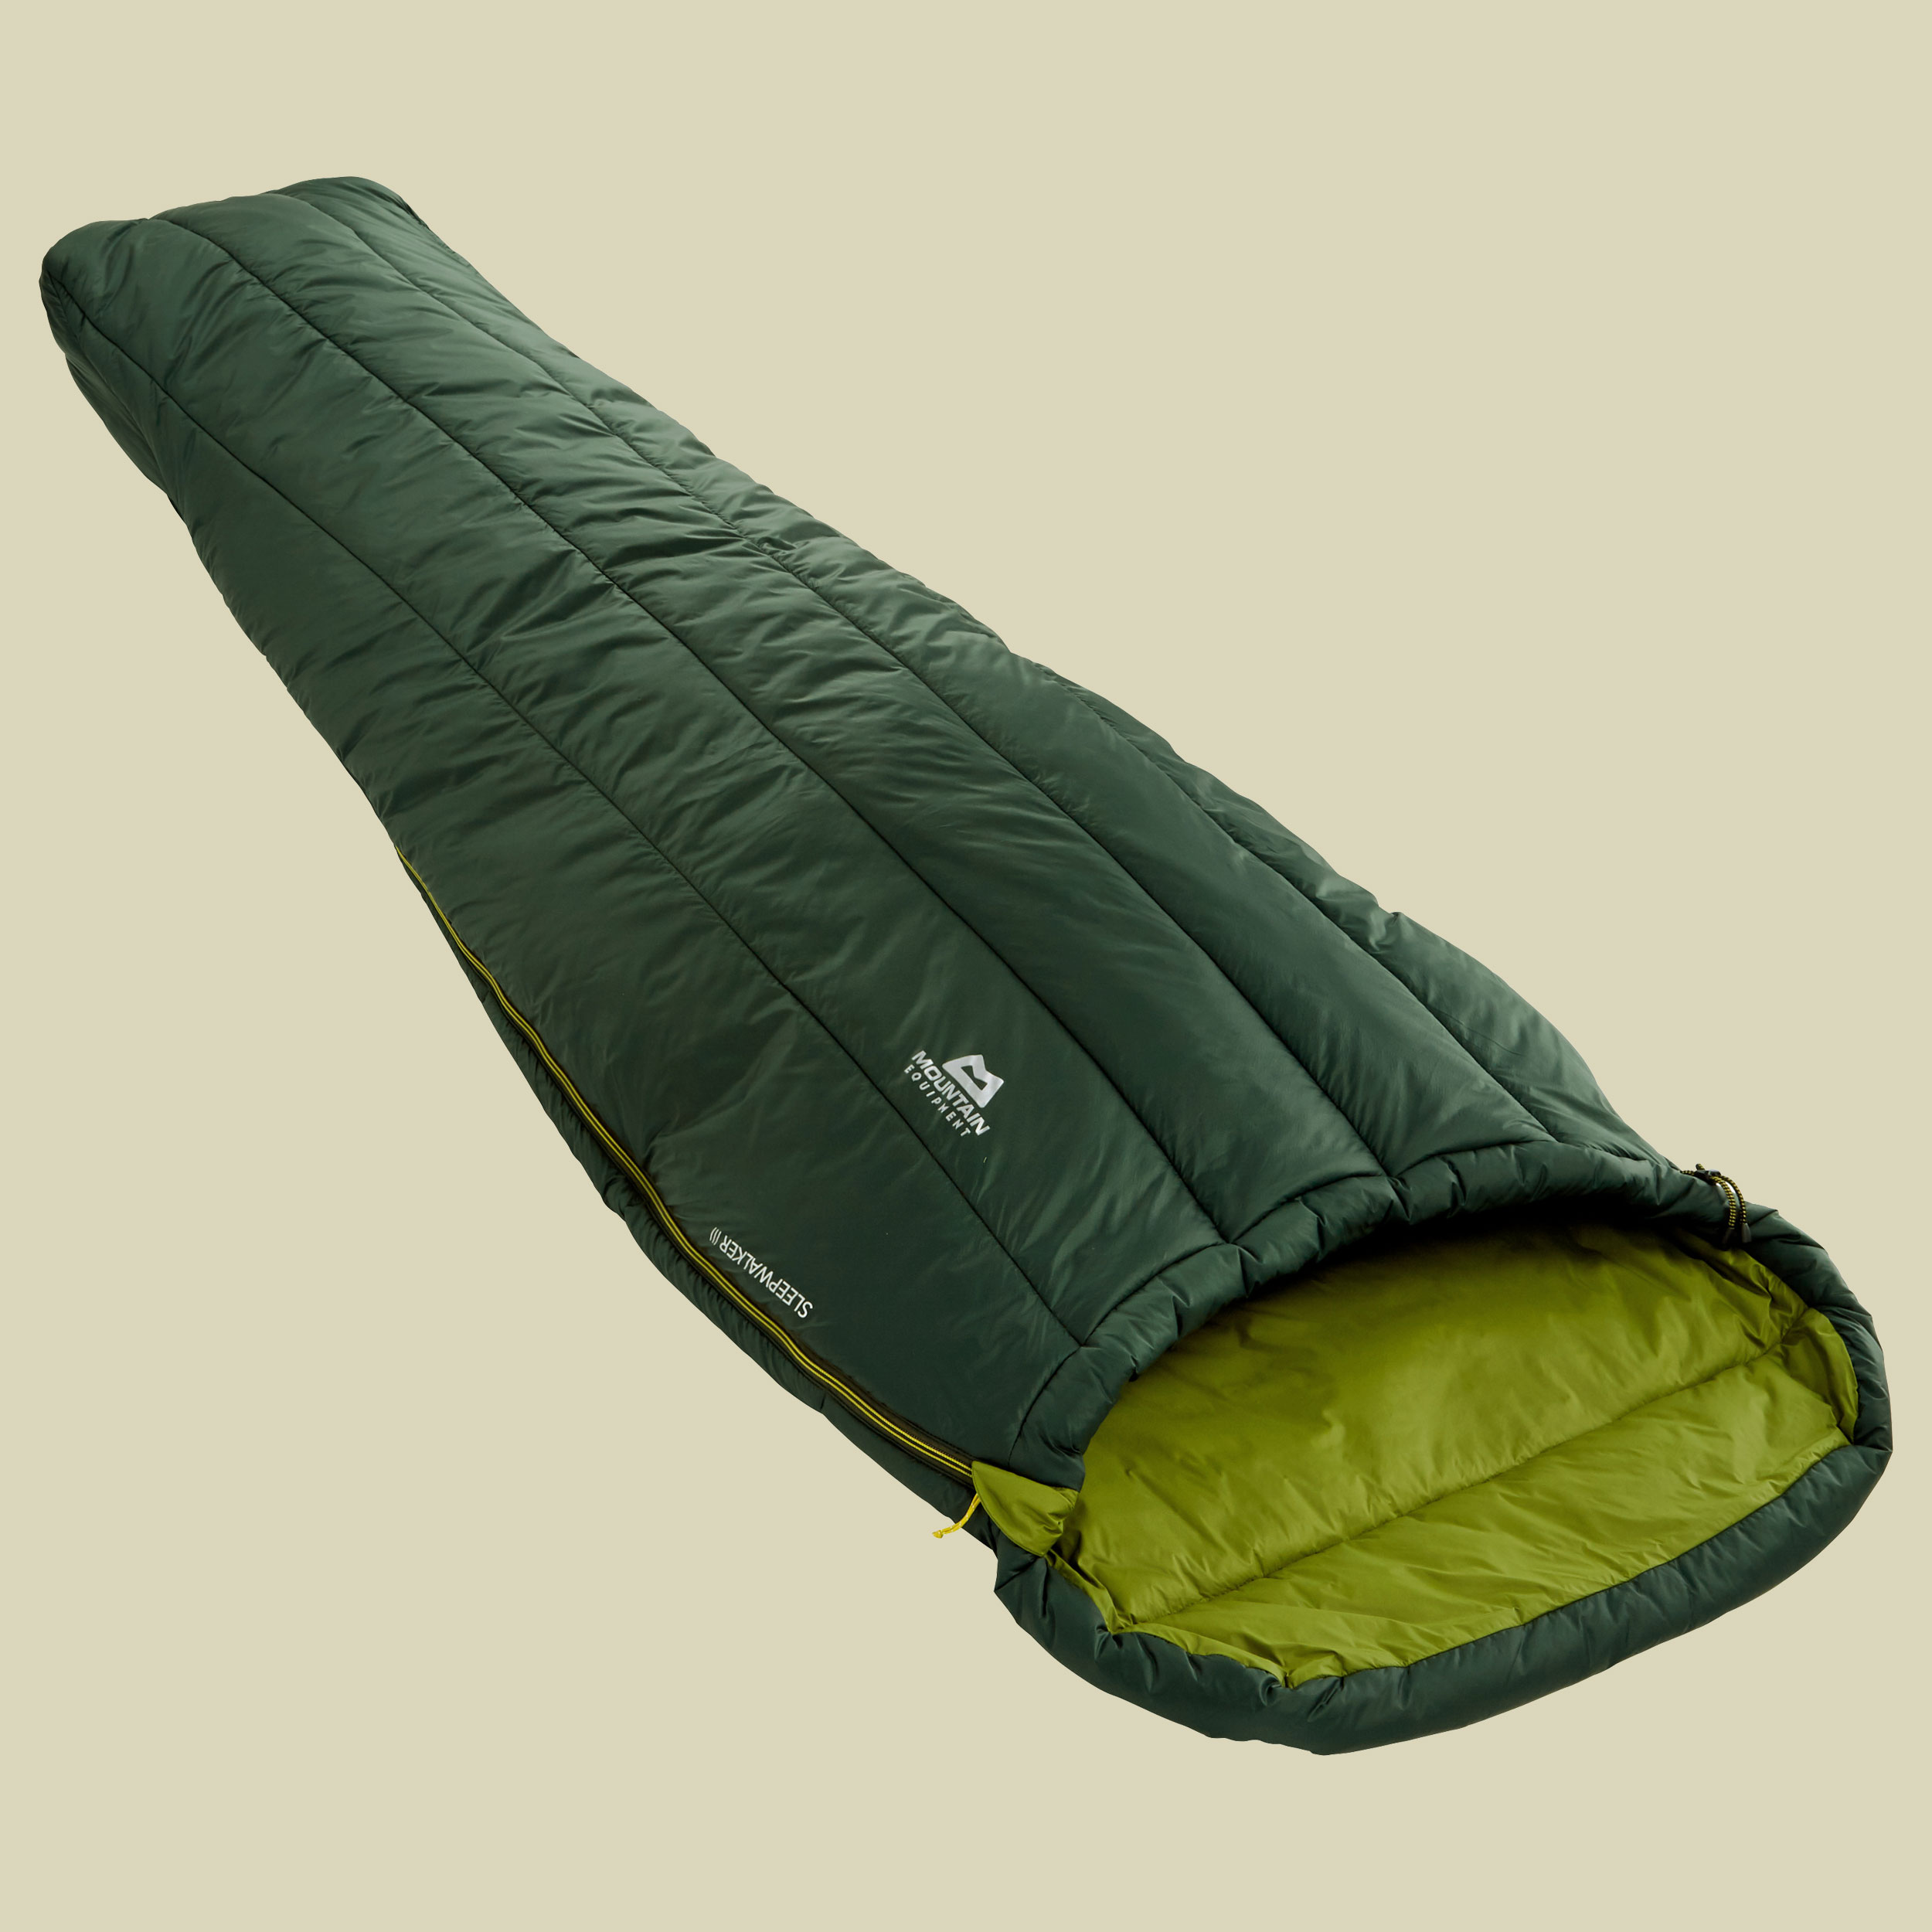 Sleepwalker III  bis Körpergröße Schlafsack 185 cm cm Farbe: pinegrove / cedar, Reißverschluss Schlafsack links